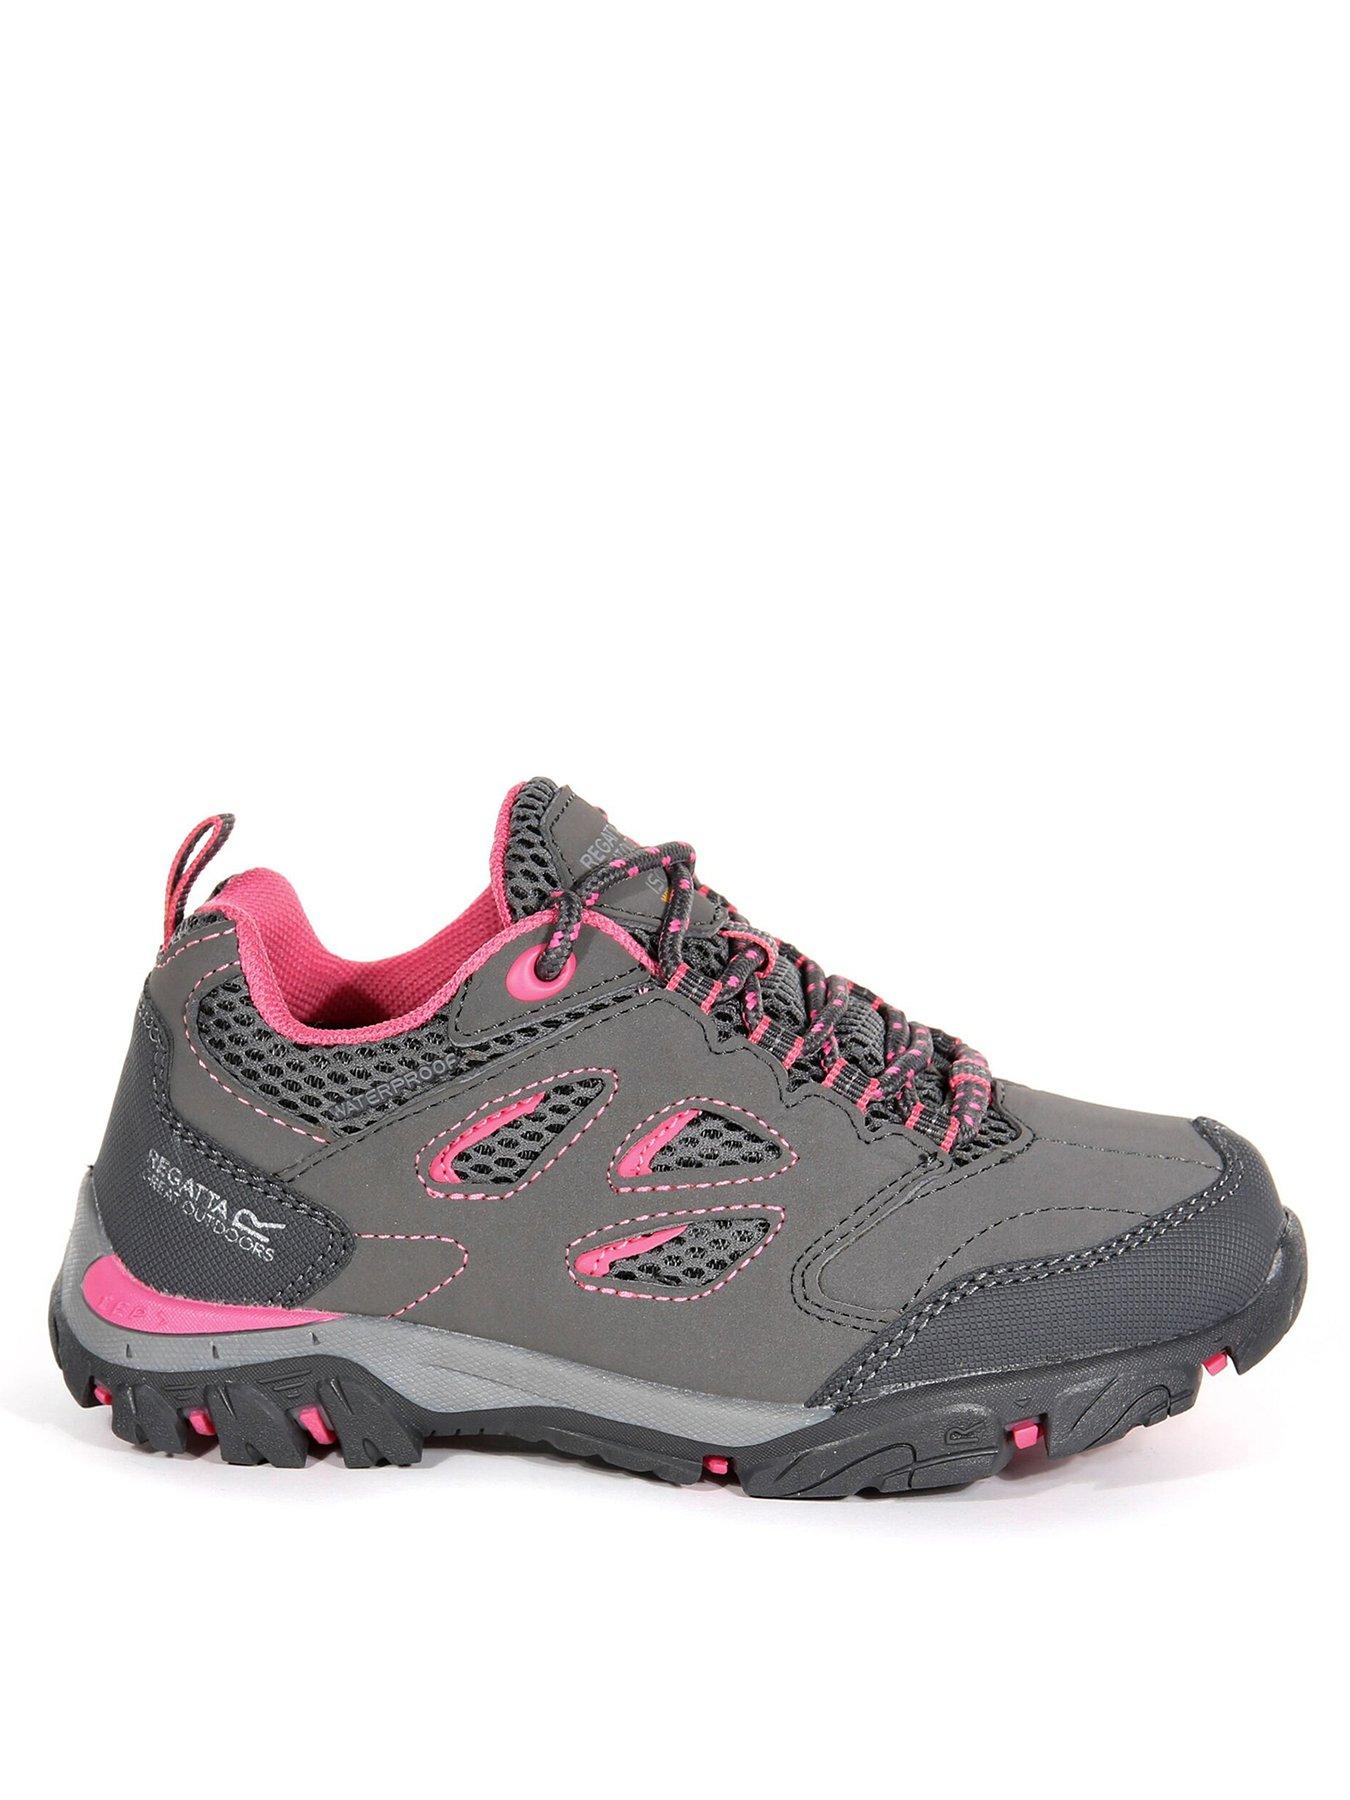 Regatta Junior Holcombe Waterproof Low-Cut Walking Boot - Grey/Pink, Grey/Pink, Size 13